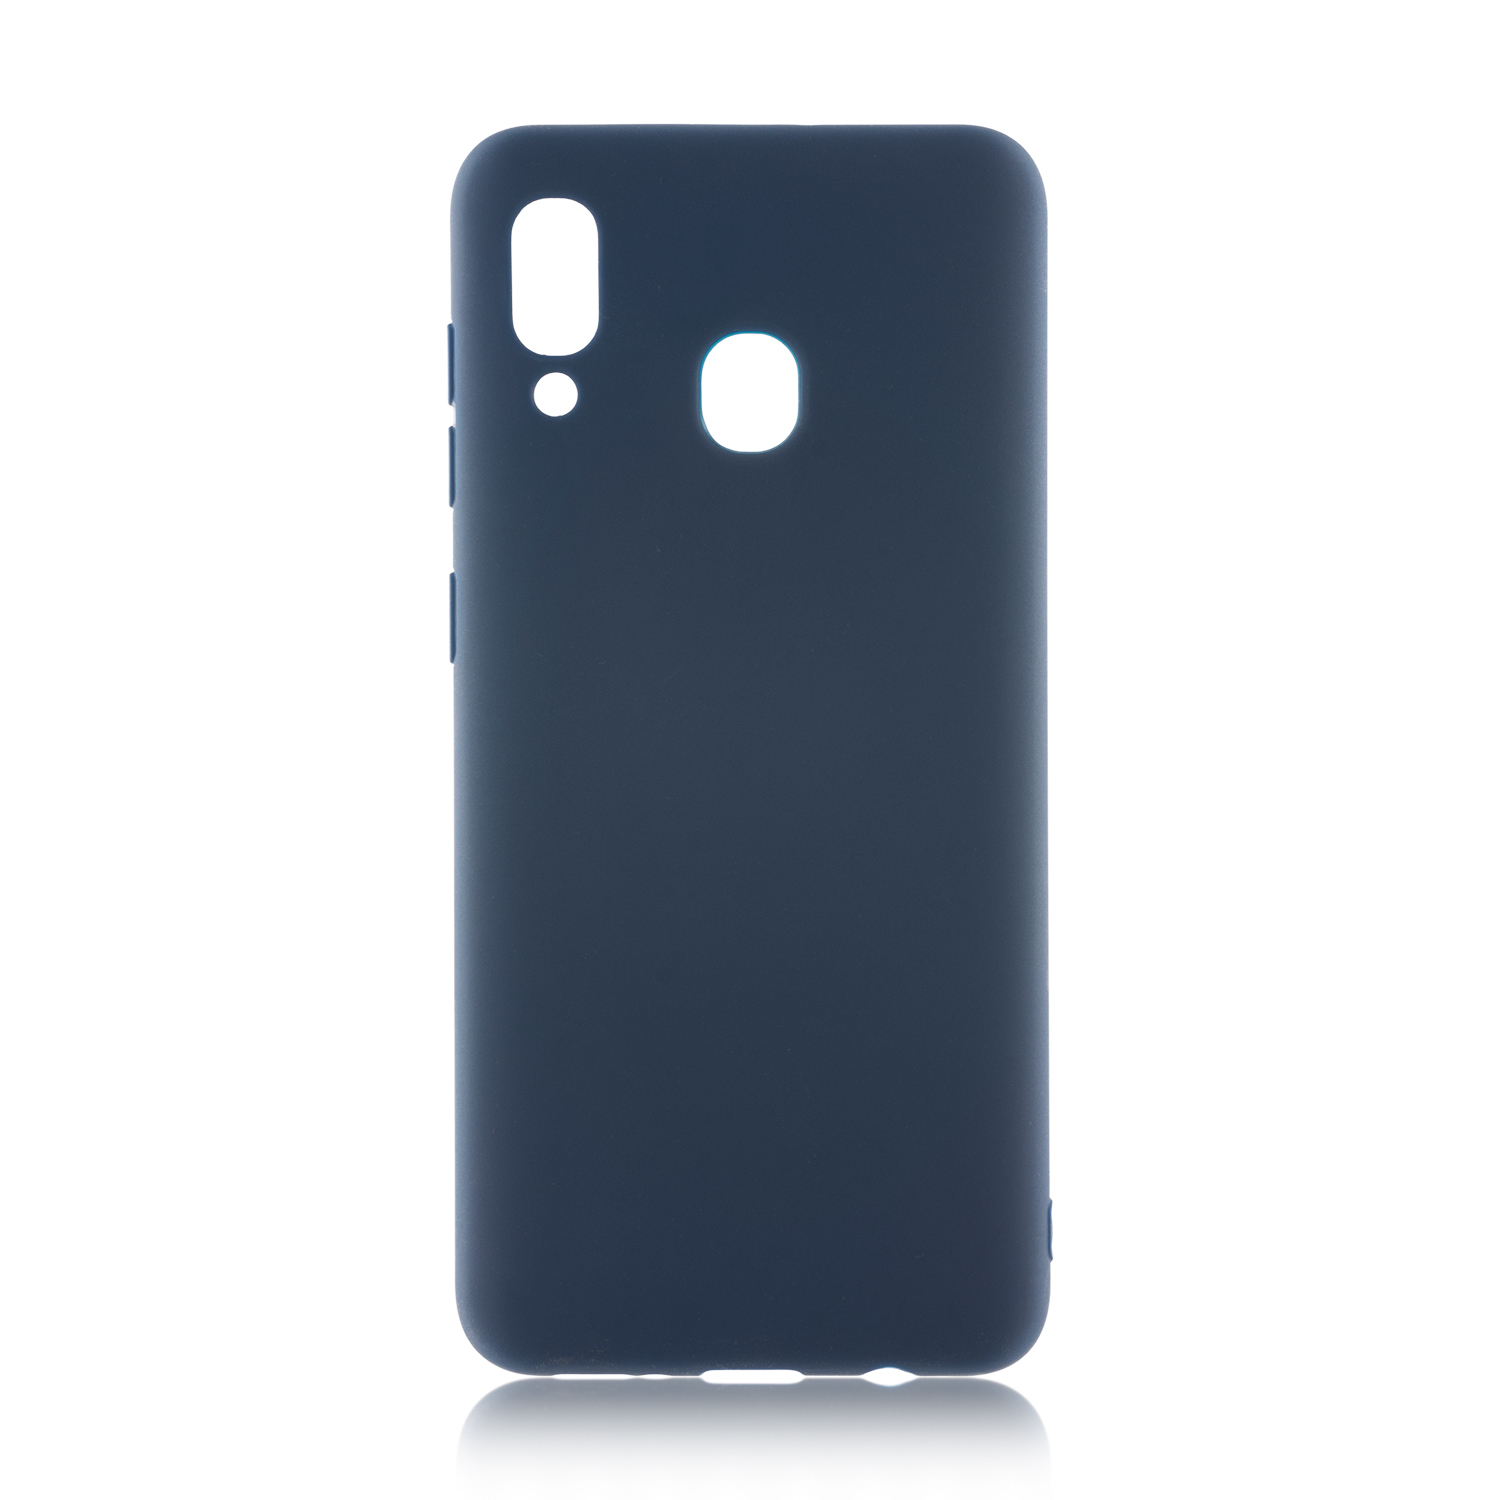 Чехол BROSCO Colourful для смартфона Samsung Galaxy A20, силикон, синий (SS-A20-COLOURFUL-BLUE)